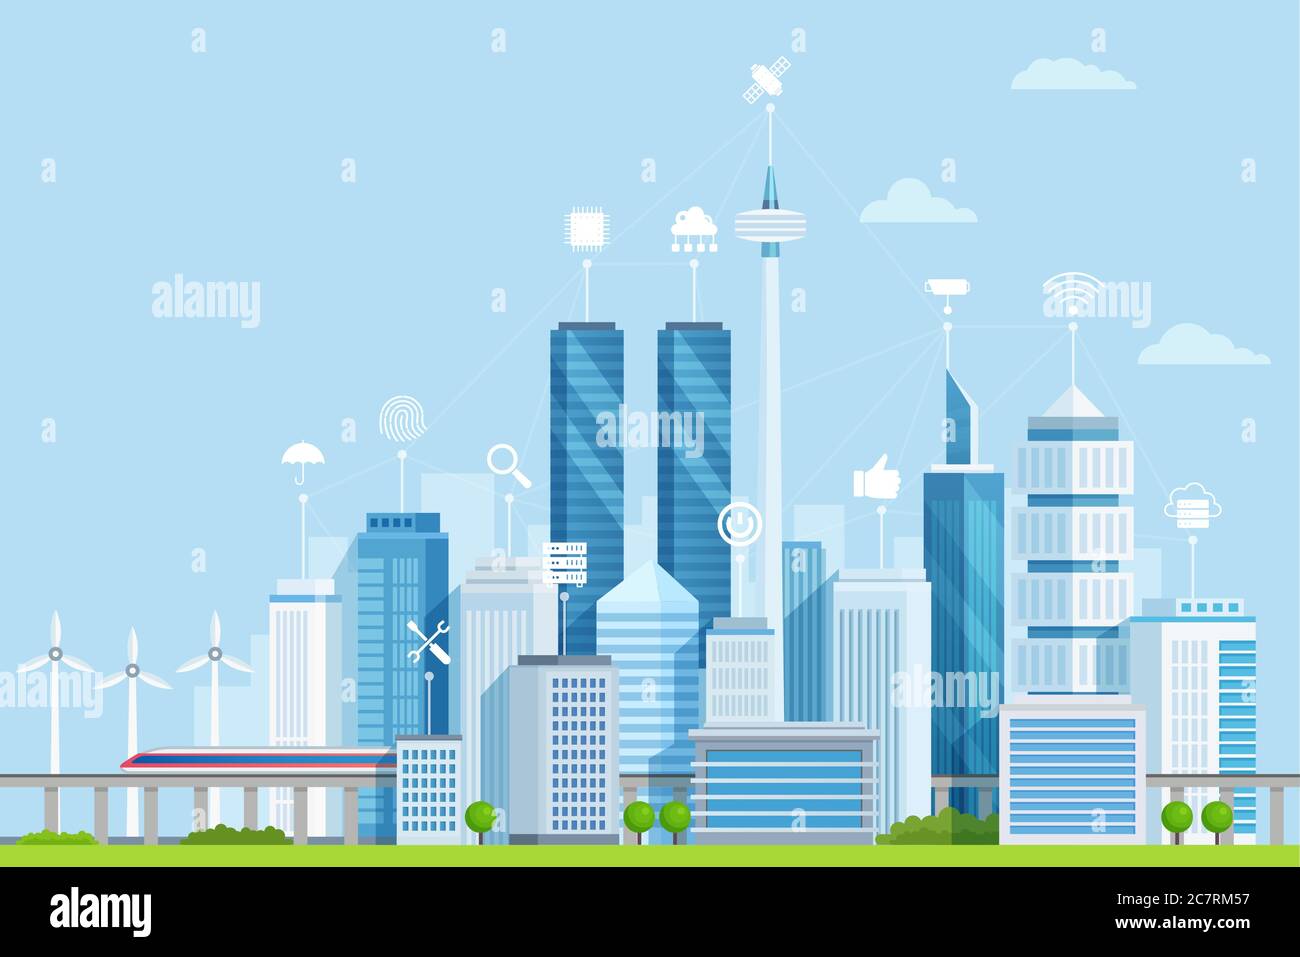 Smart city flat vector illustration. Modern urban area with digital buildings network. Cartoon skyscrapers, towers sending telecommunication, wifi signals. Futuristic IOT city using wind power energy. Stock Vector